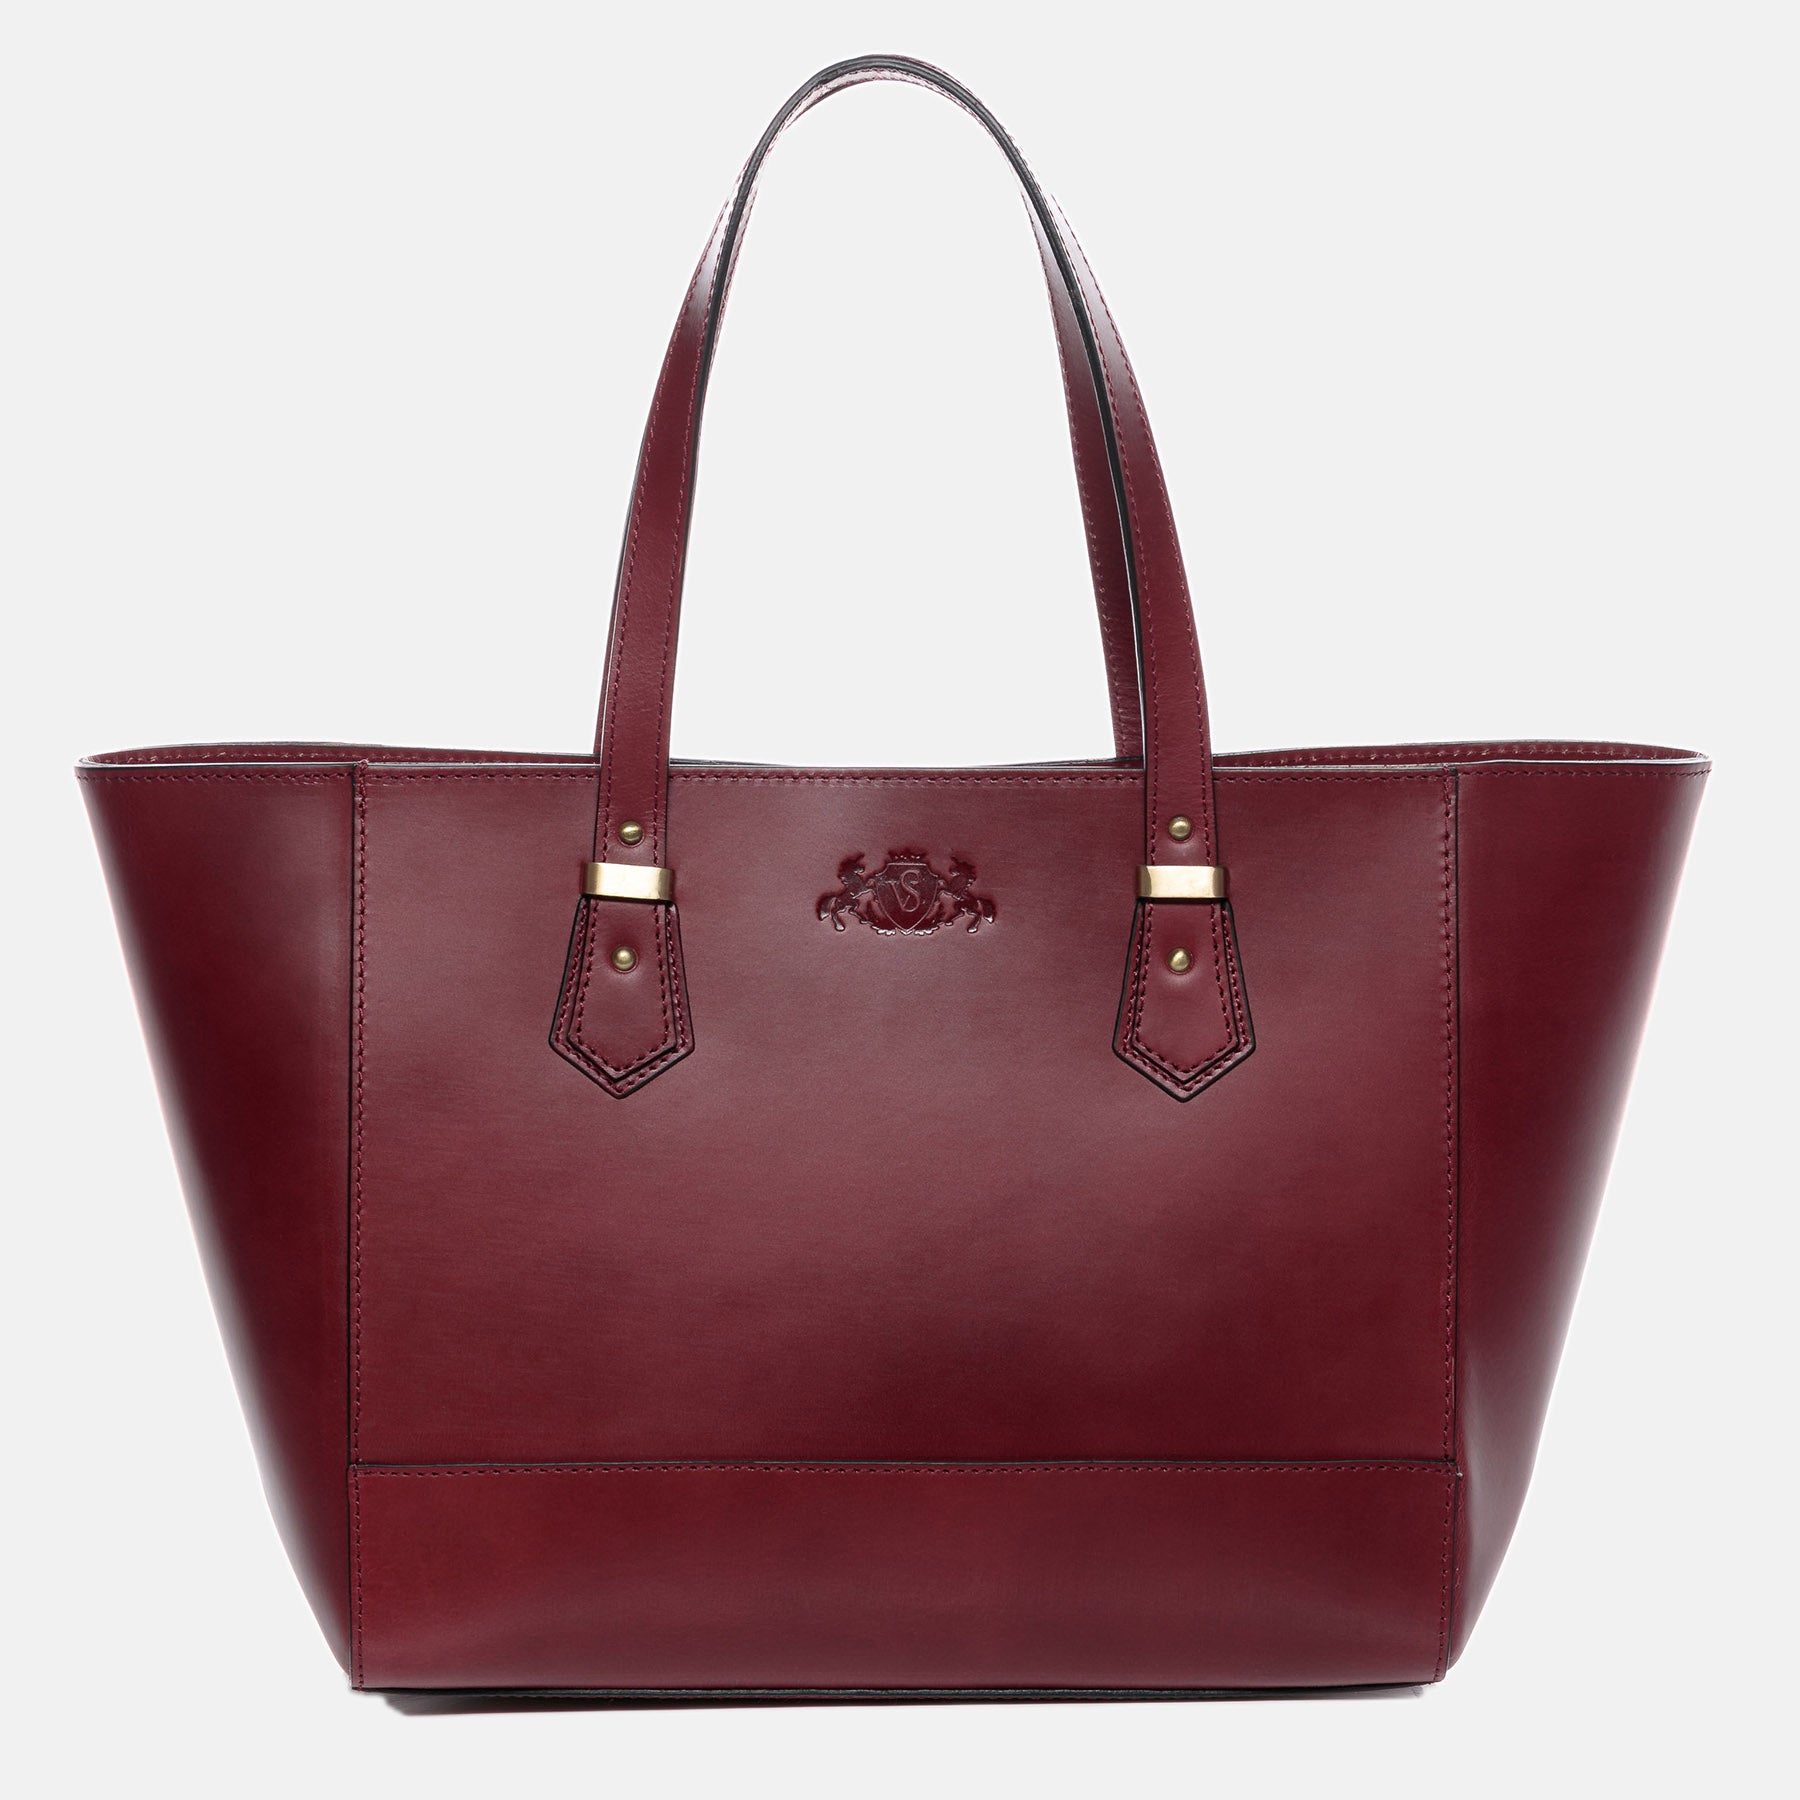 Handbag TRISH saddle leather red